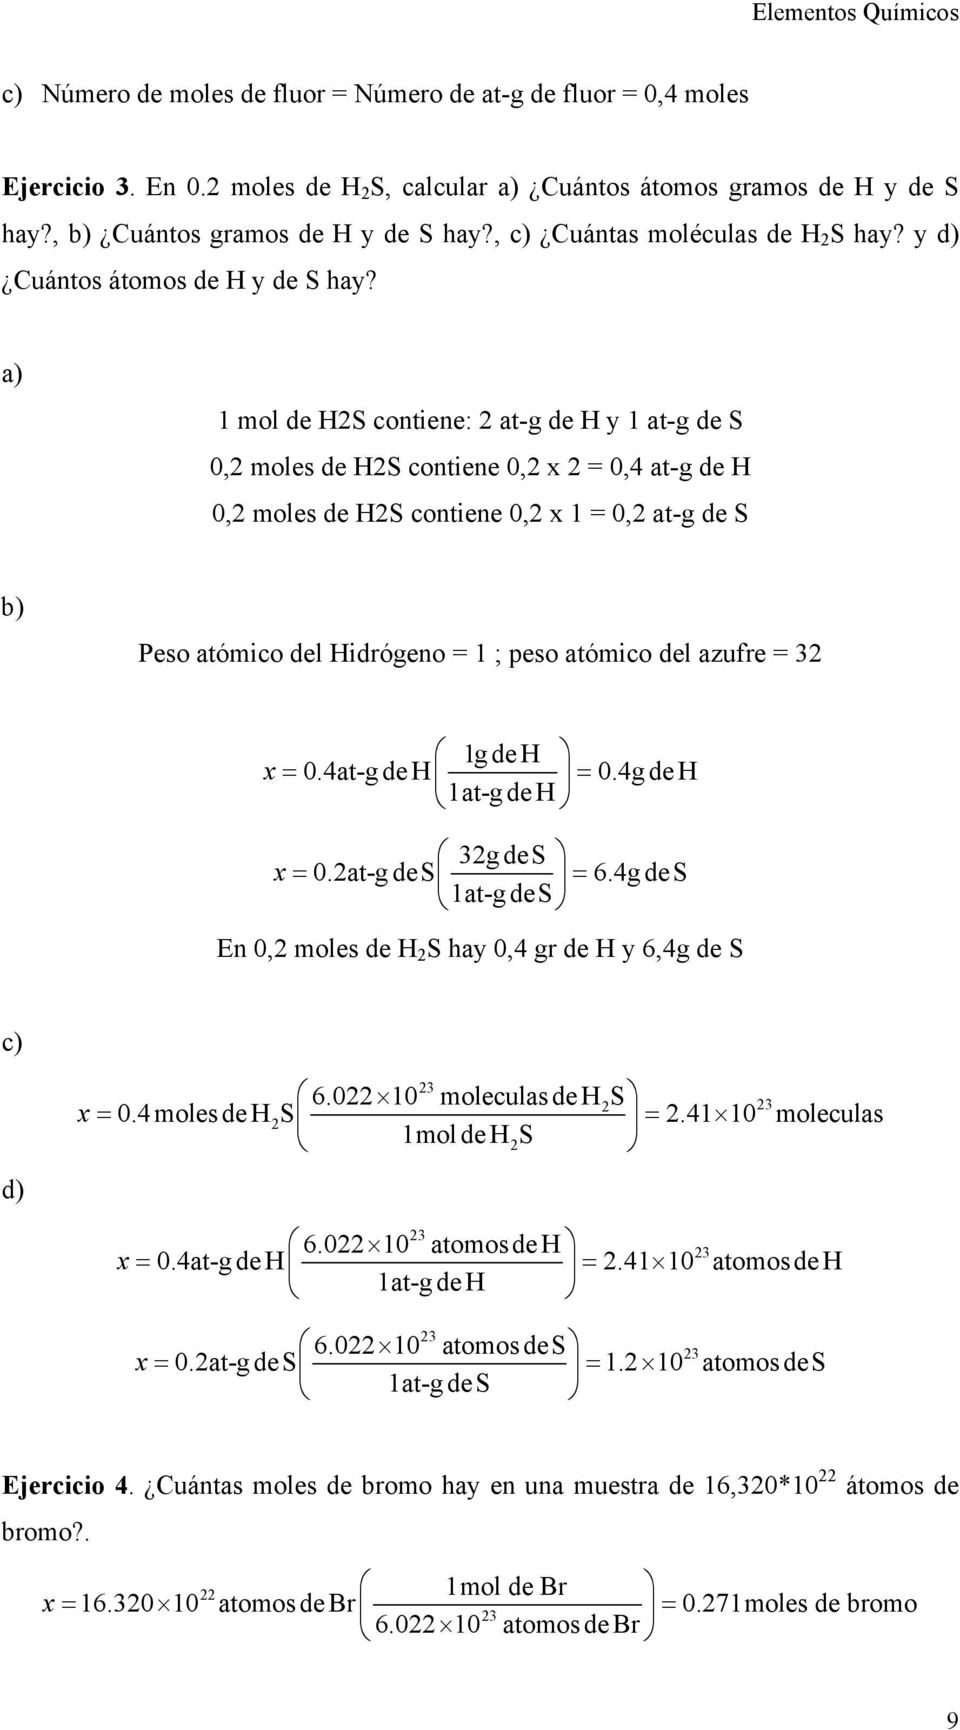 a) 1 mol de H2S contiene: 2 at-g de H y 1 at-g de S 0,2 moles de H2S contiene 0,2 x 2 = 0,4 at-g de H 0,2 moles de H2S contiene 0,2 x 1 = 0,2 at-g de S b) Peso atómico del Hidrógeno = 1 ; peso